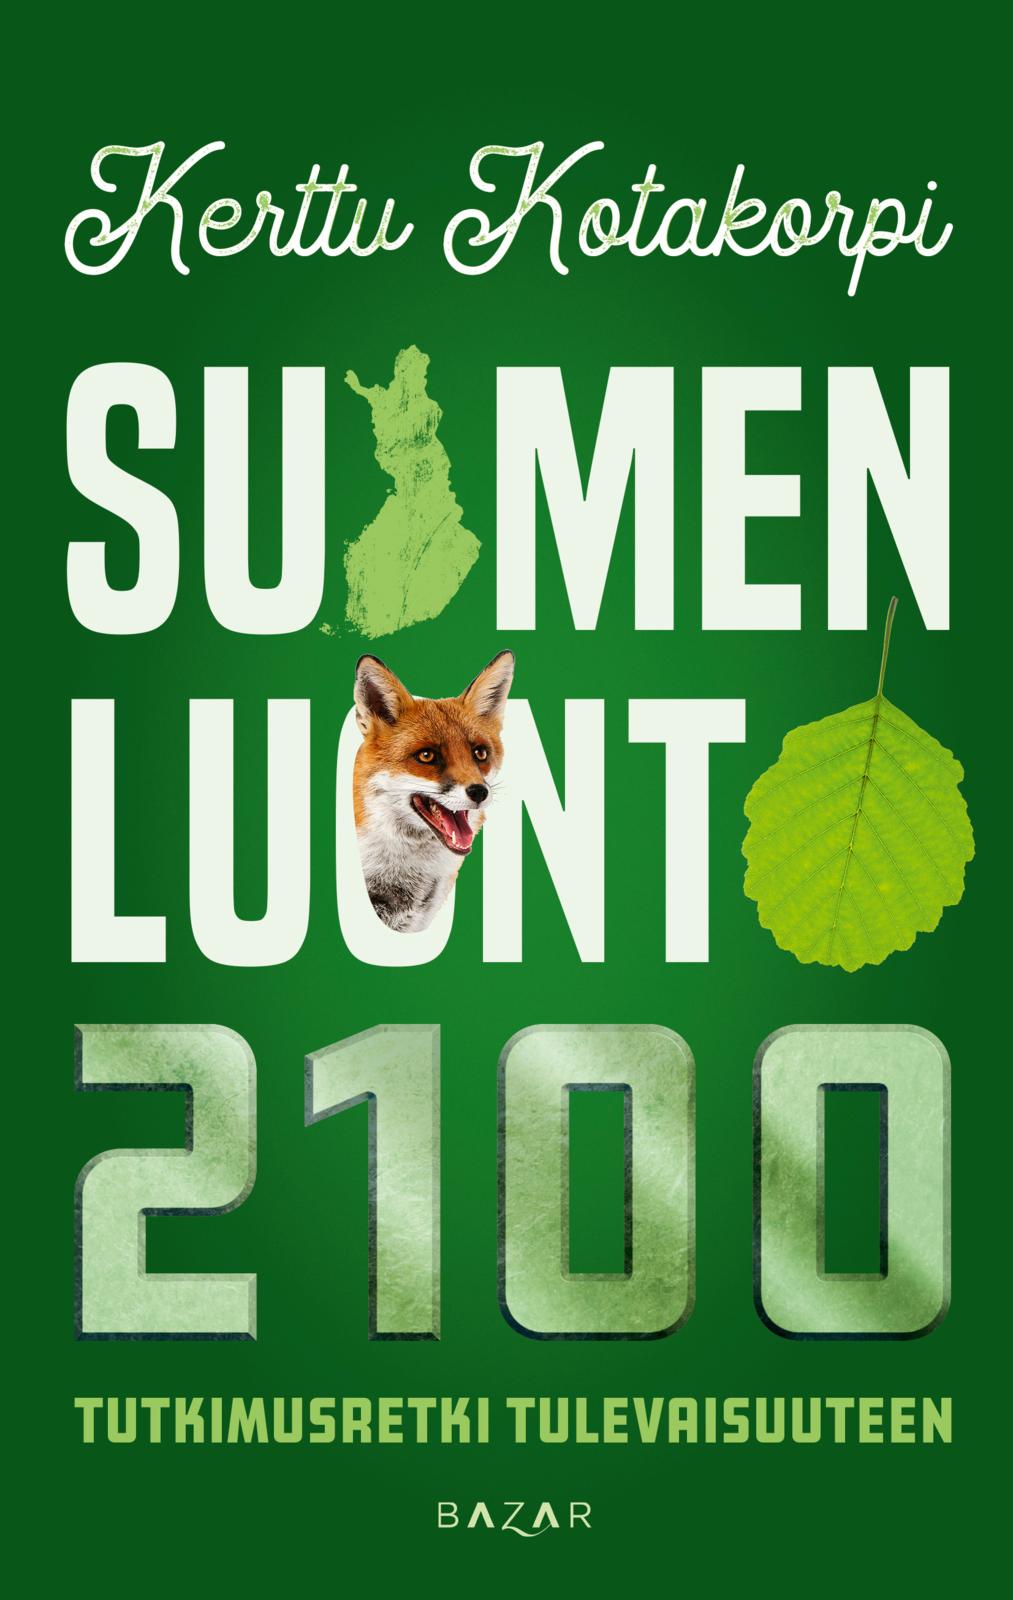 Kerttu Kotakorpi: Suomen Luonto 2100 (Hardcover, Finnish language, 2021, Bazar)